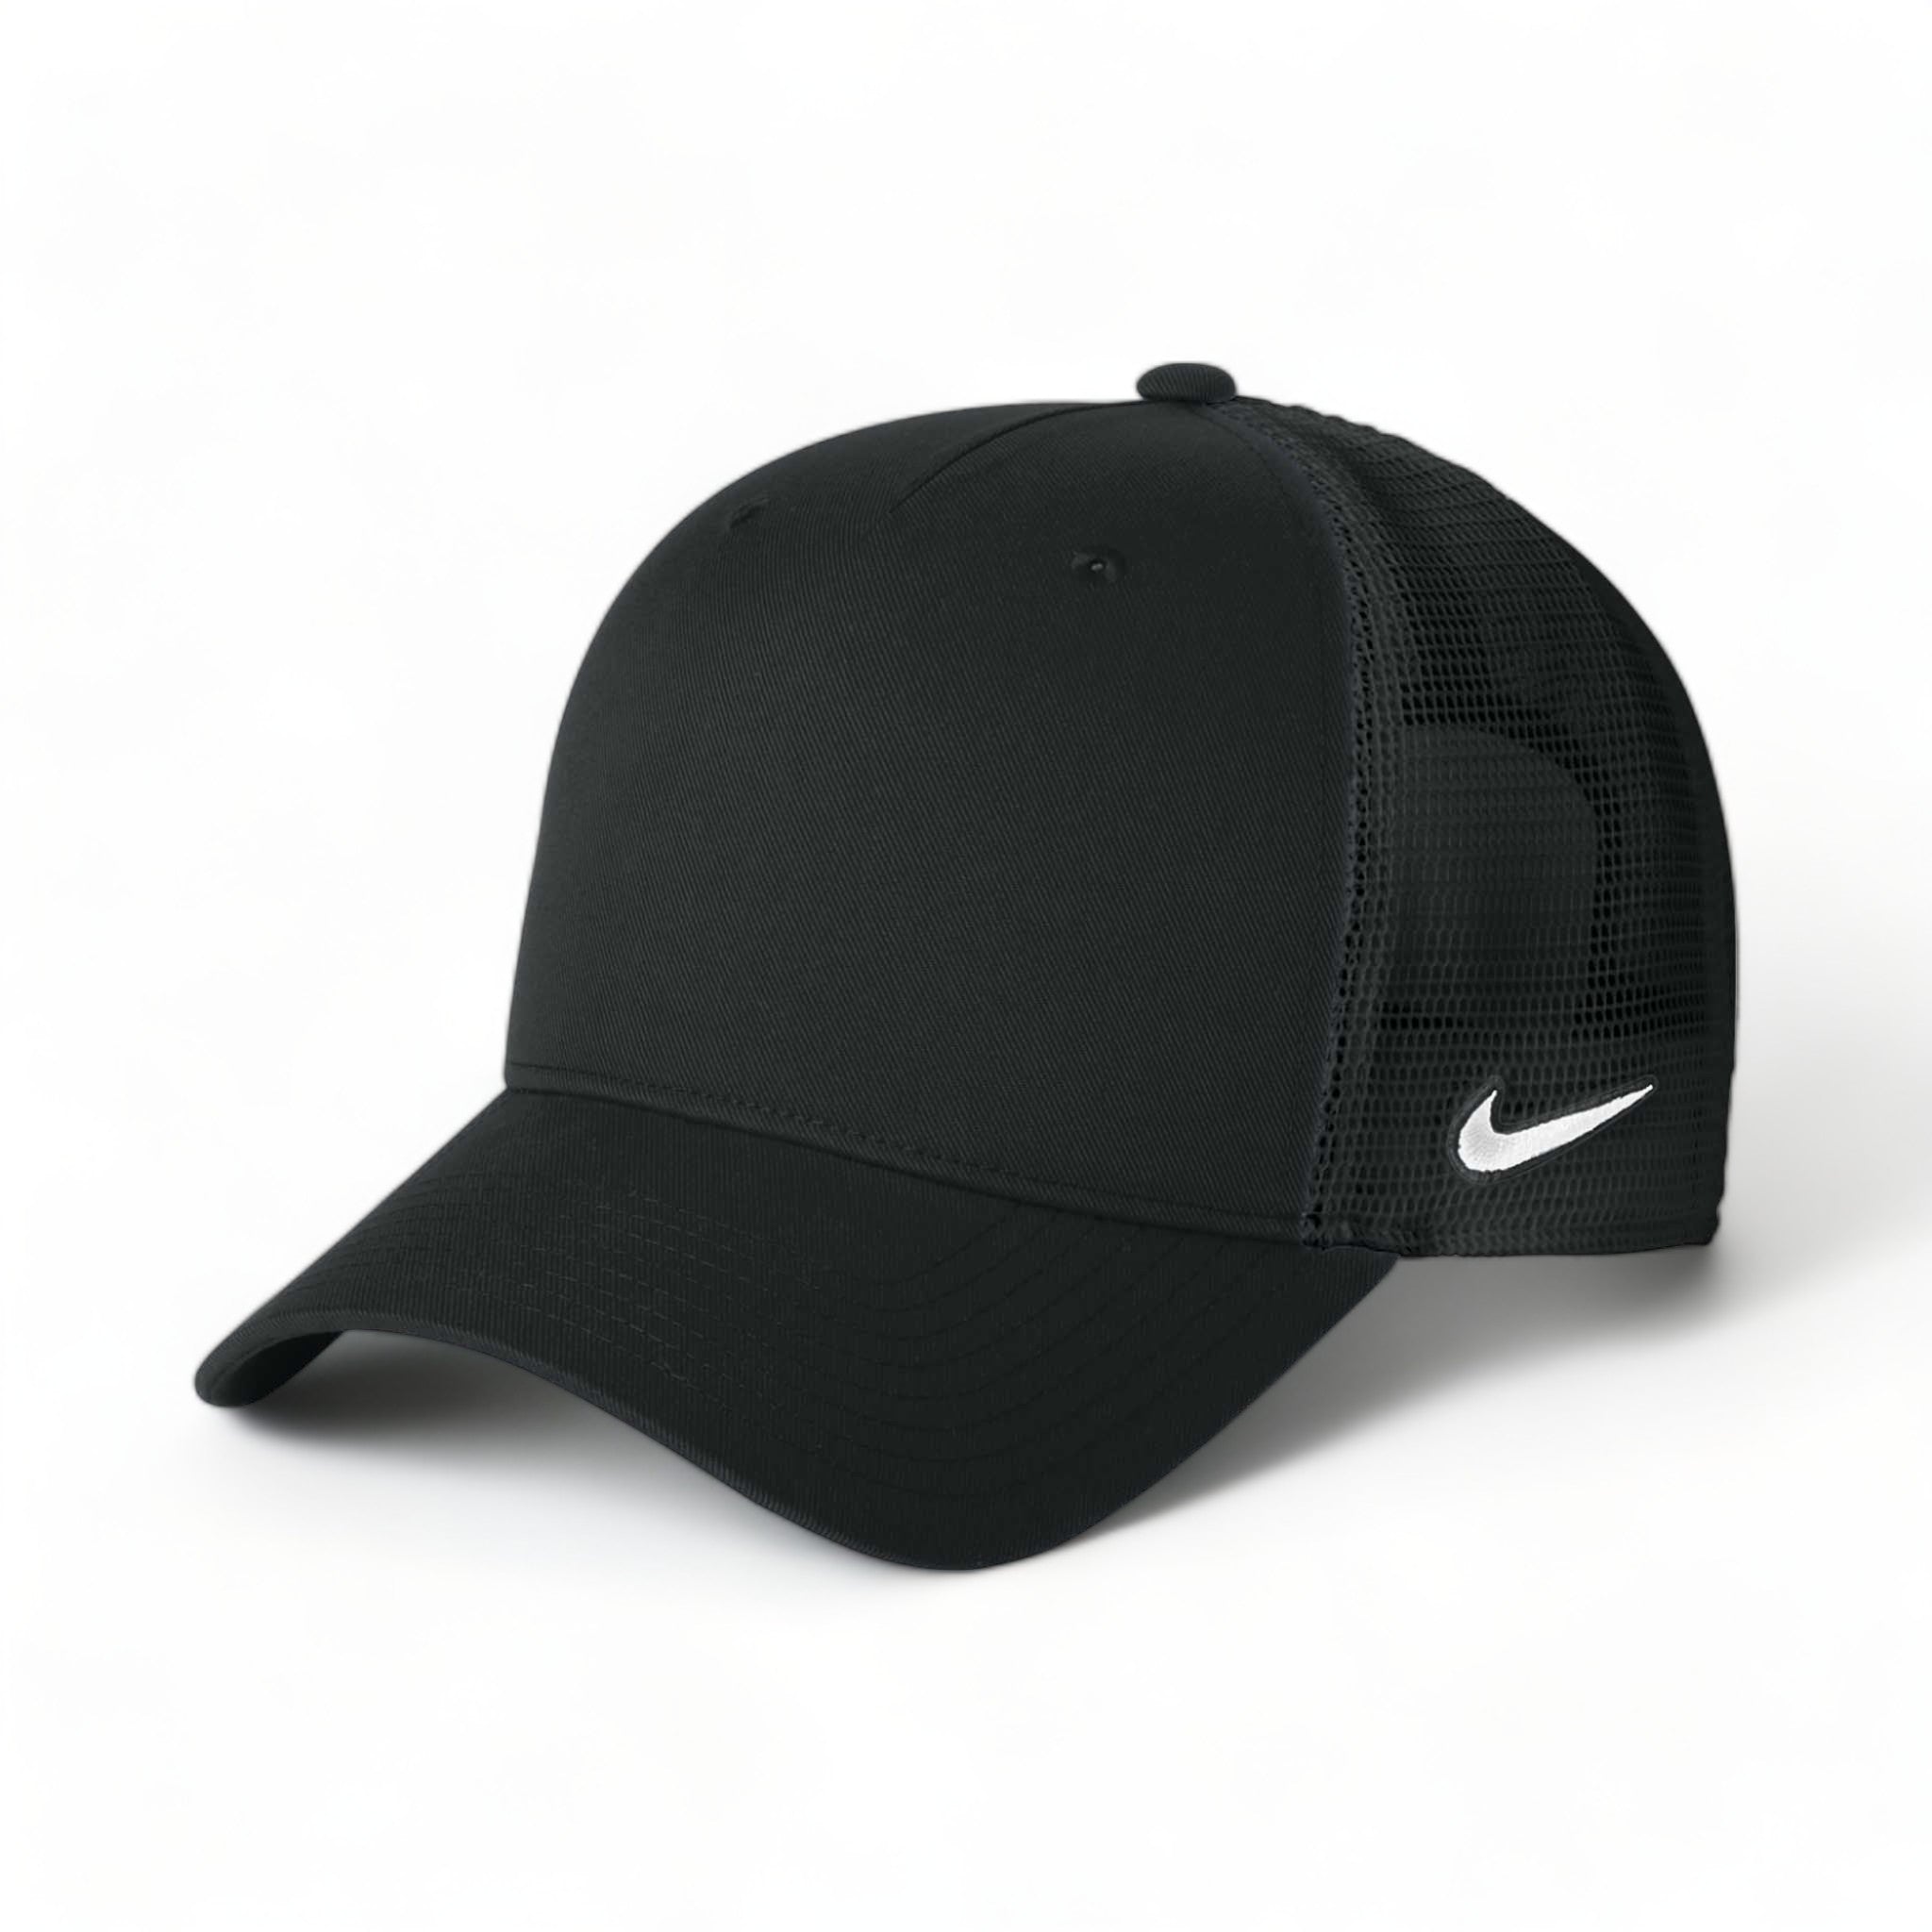 Side view of Nike NKFN9893 custom hat in black and black